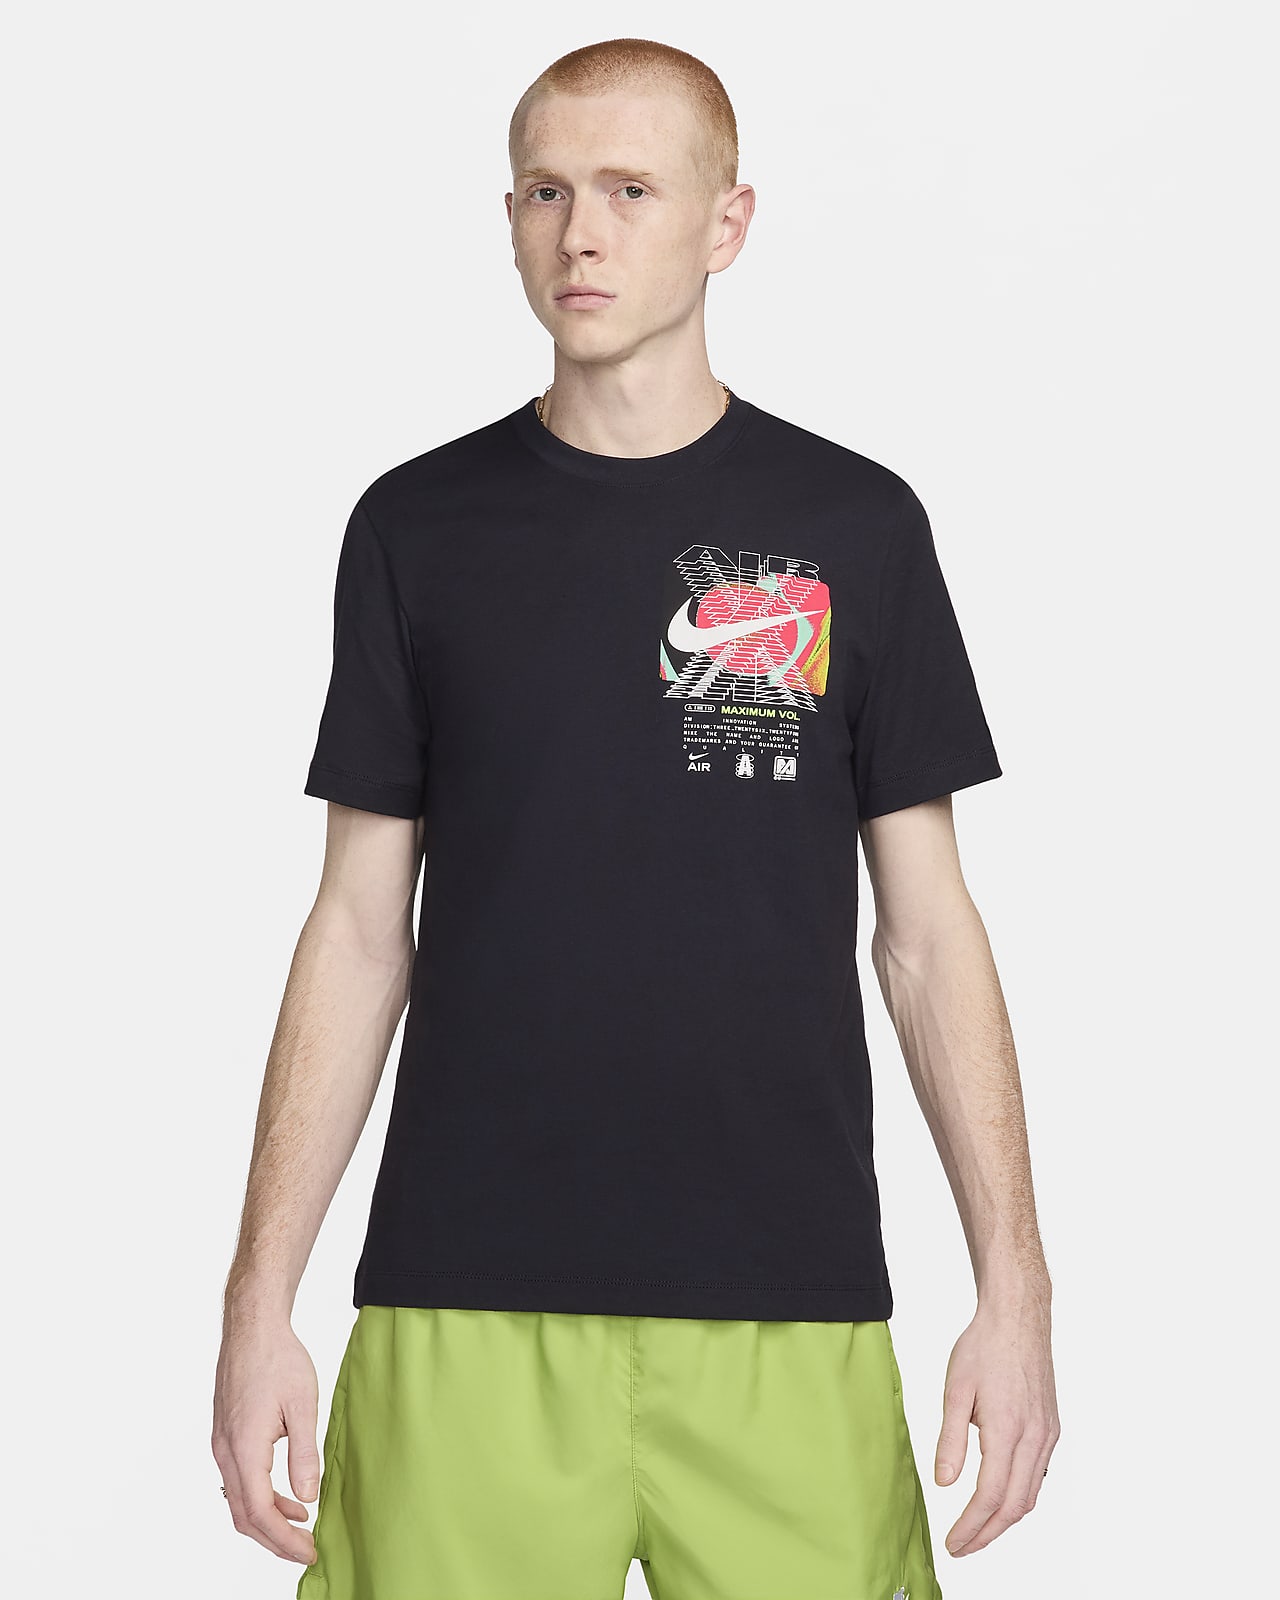 Nike Sportswear Samarreta de coll rodó - Home